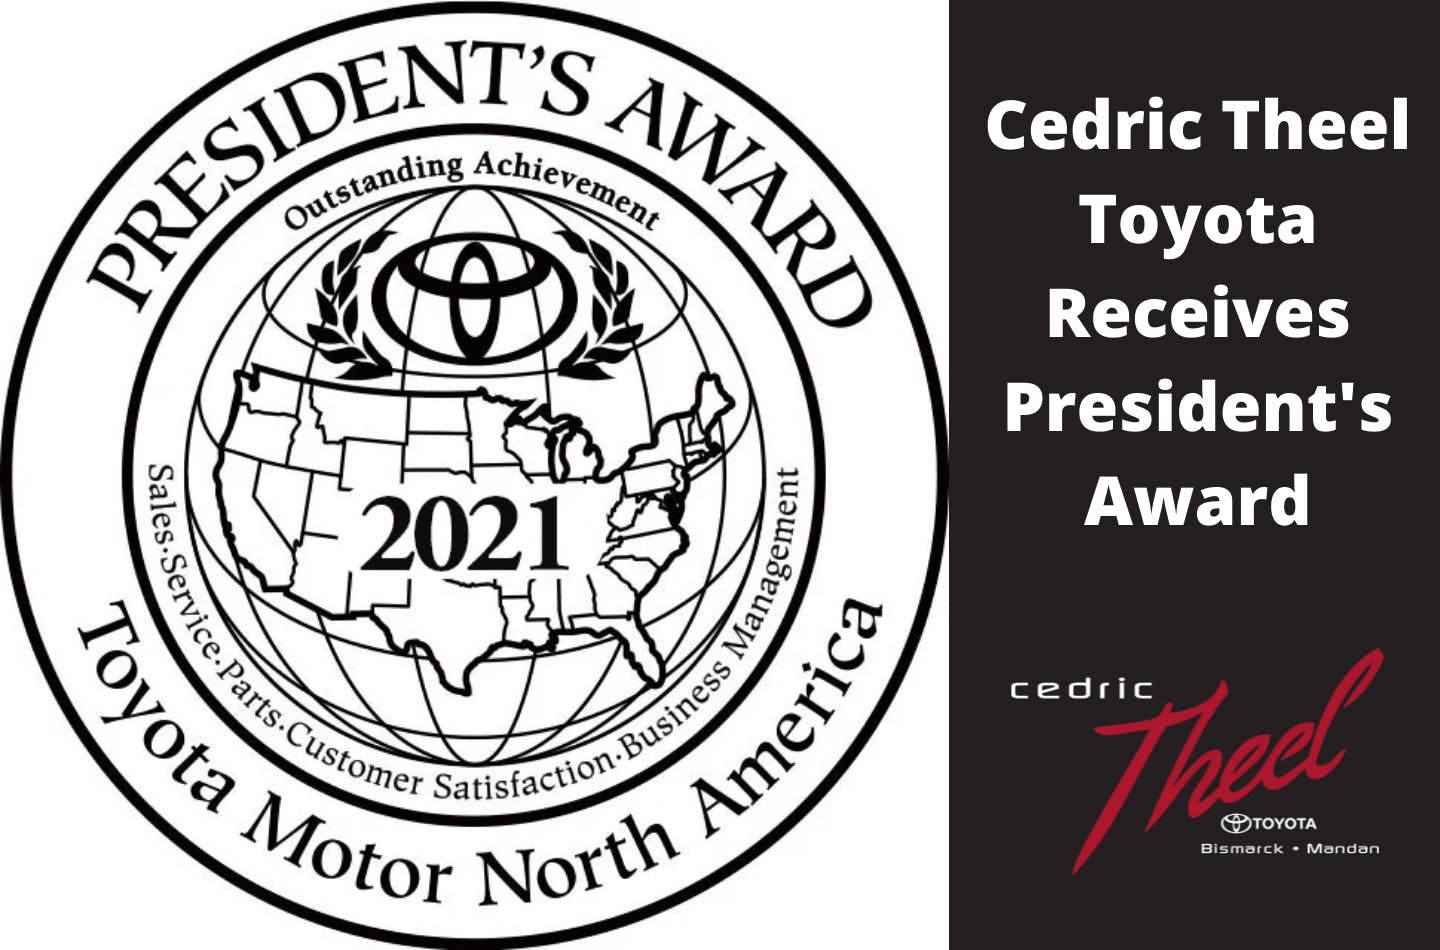 2021 Toyota President's Award